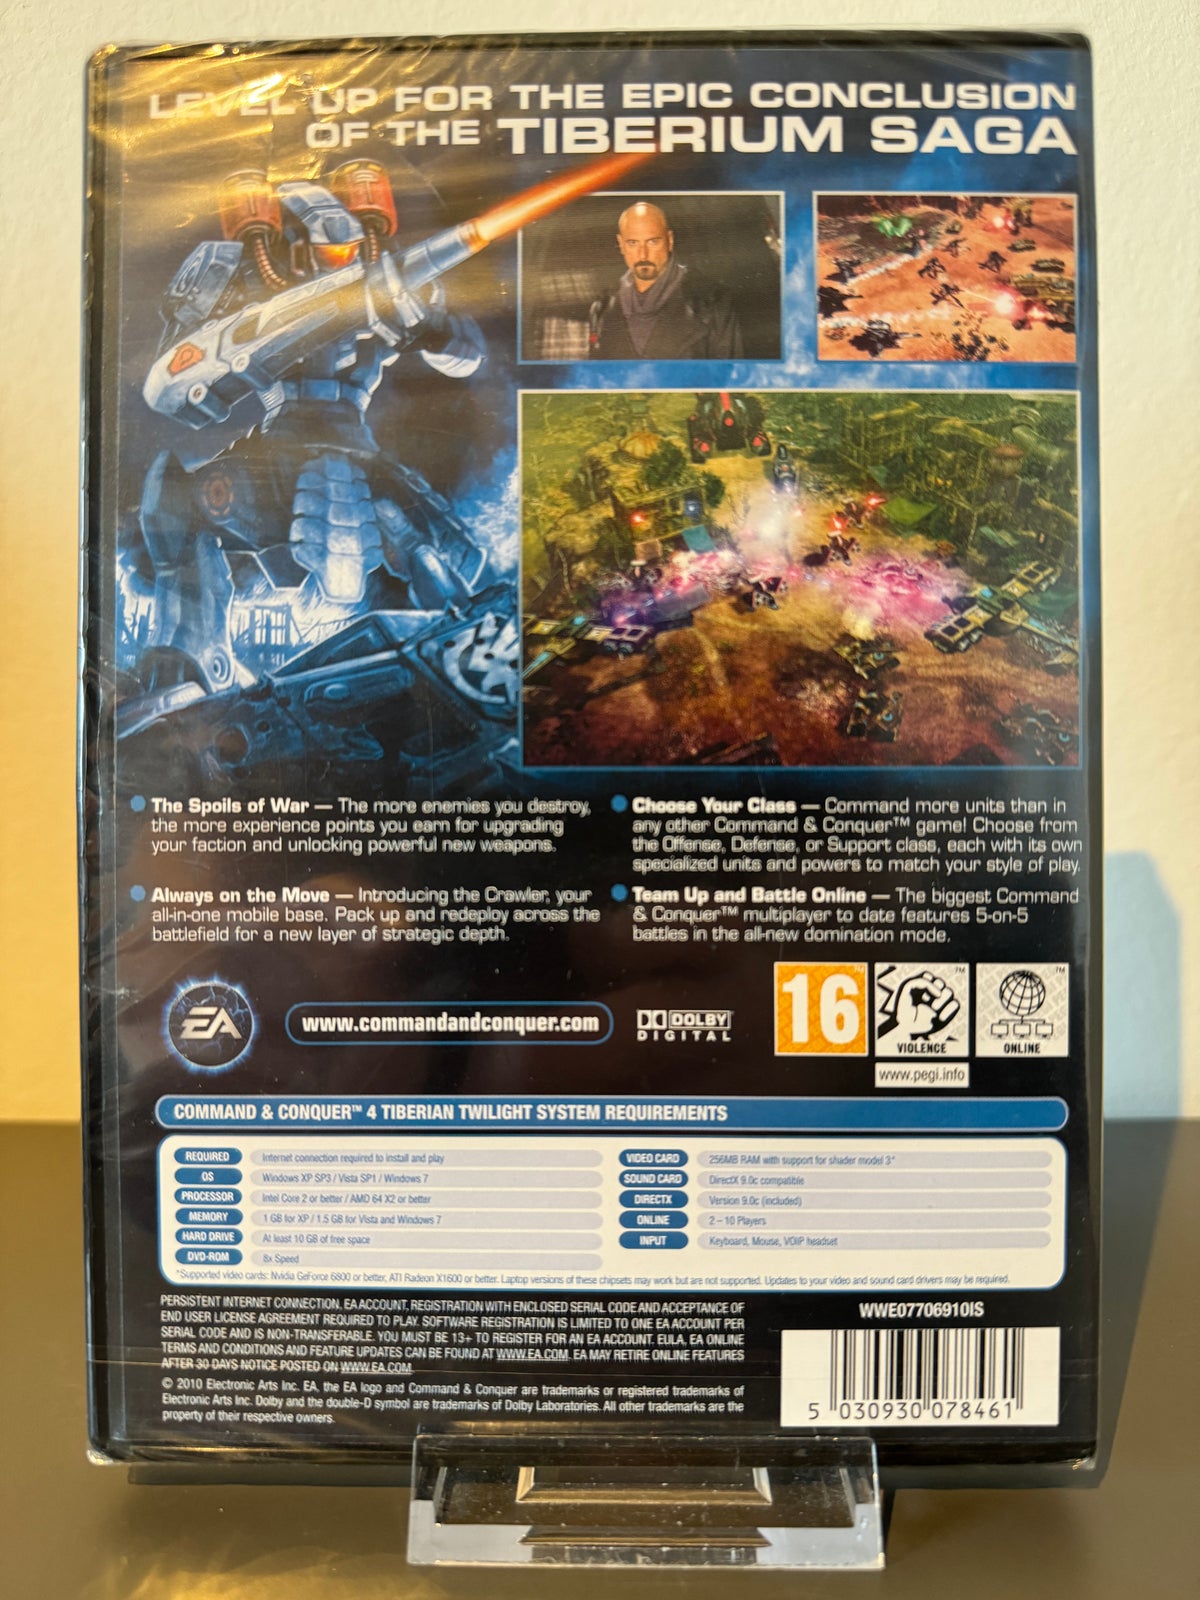 Command & Conquer 4 - Sealed, til pc, anden genre